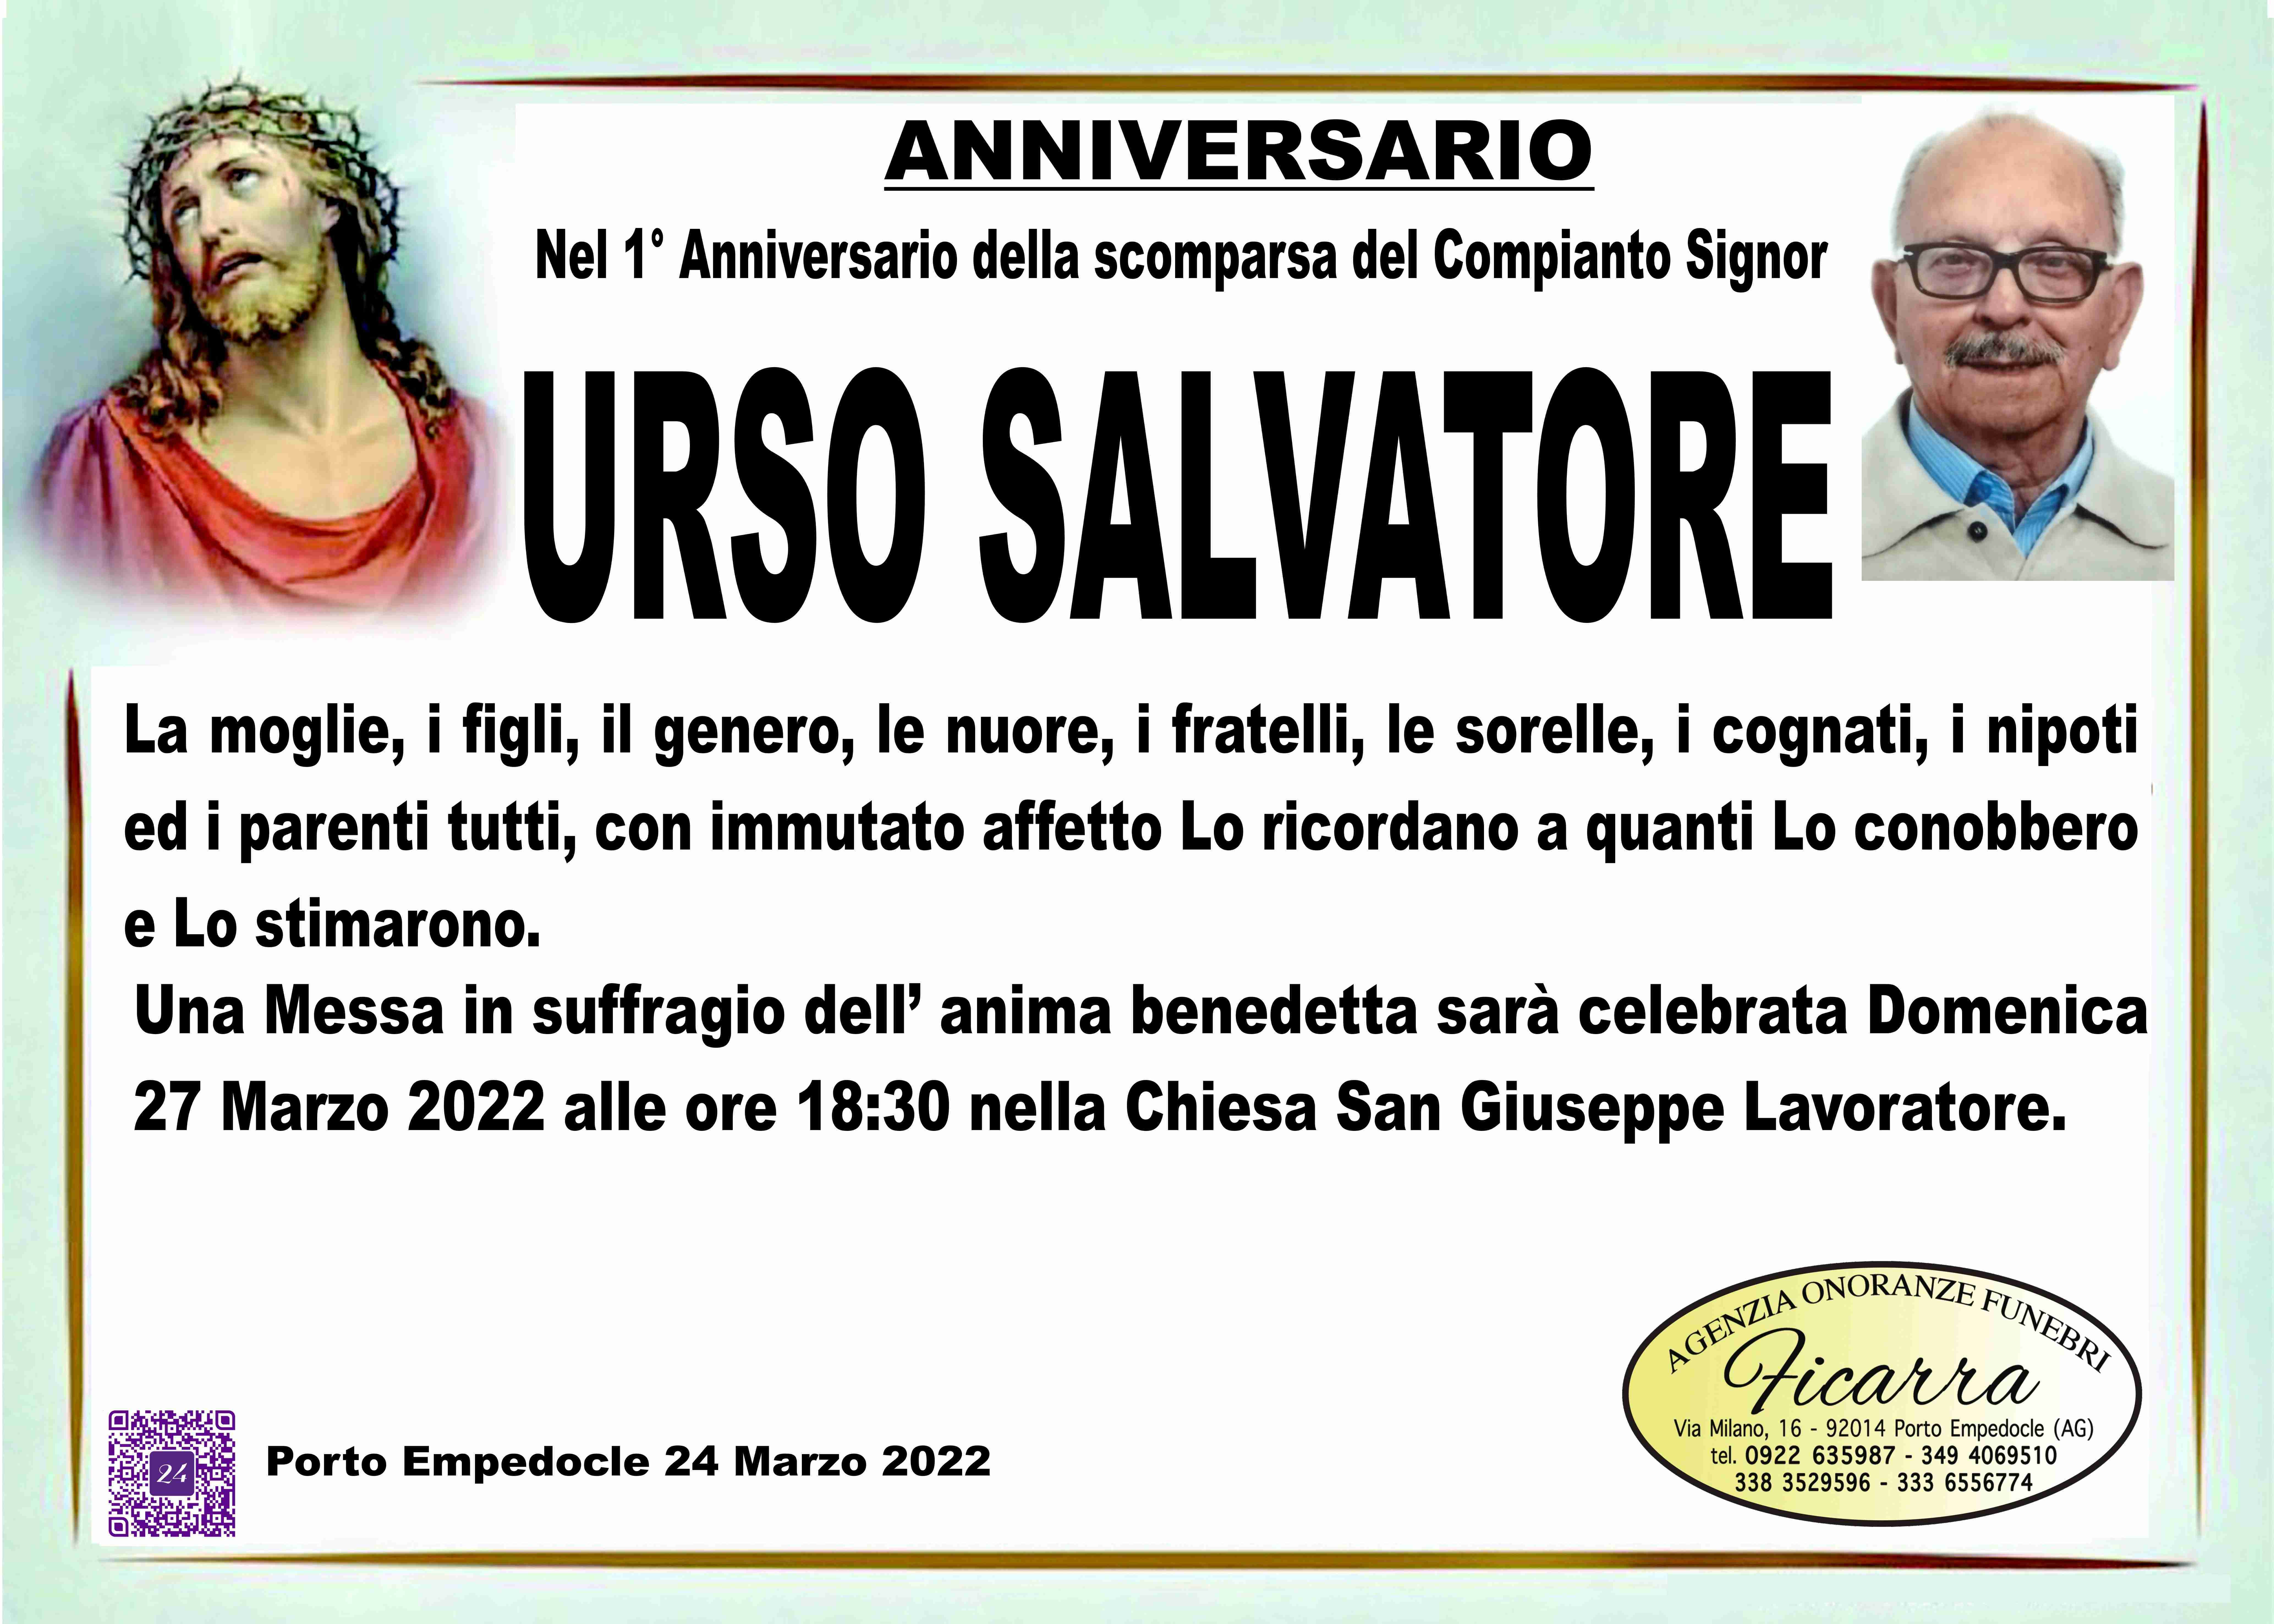 Salvatore Urso